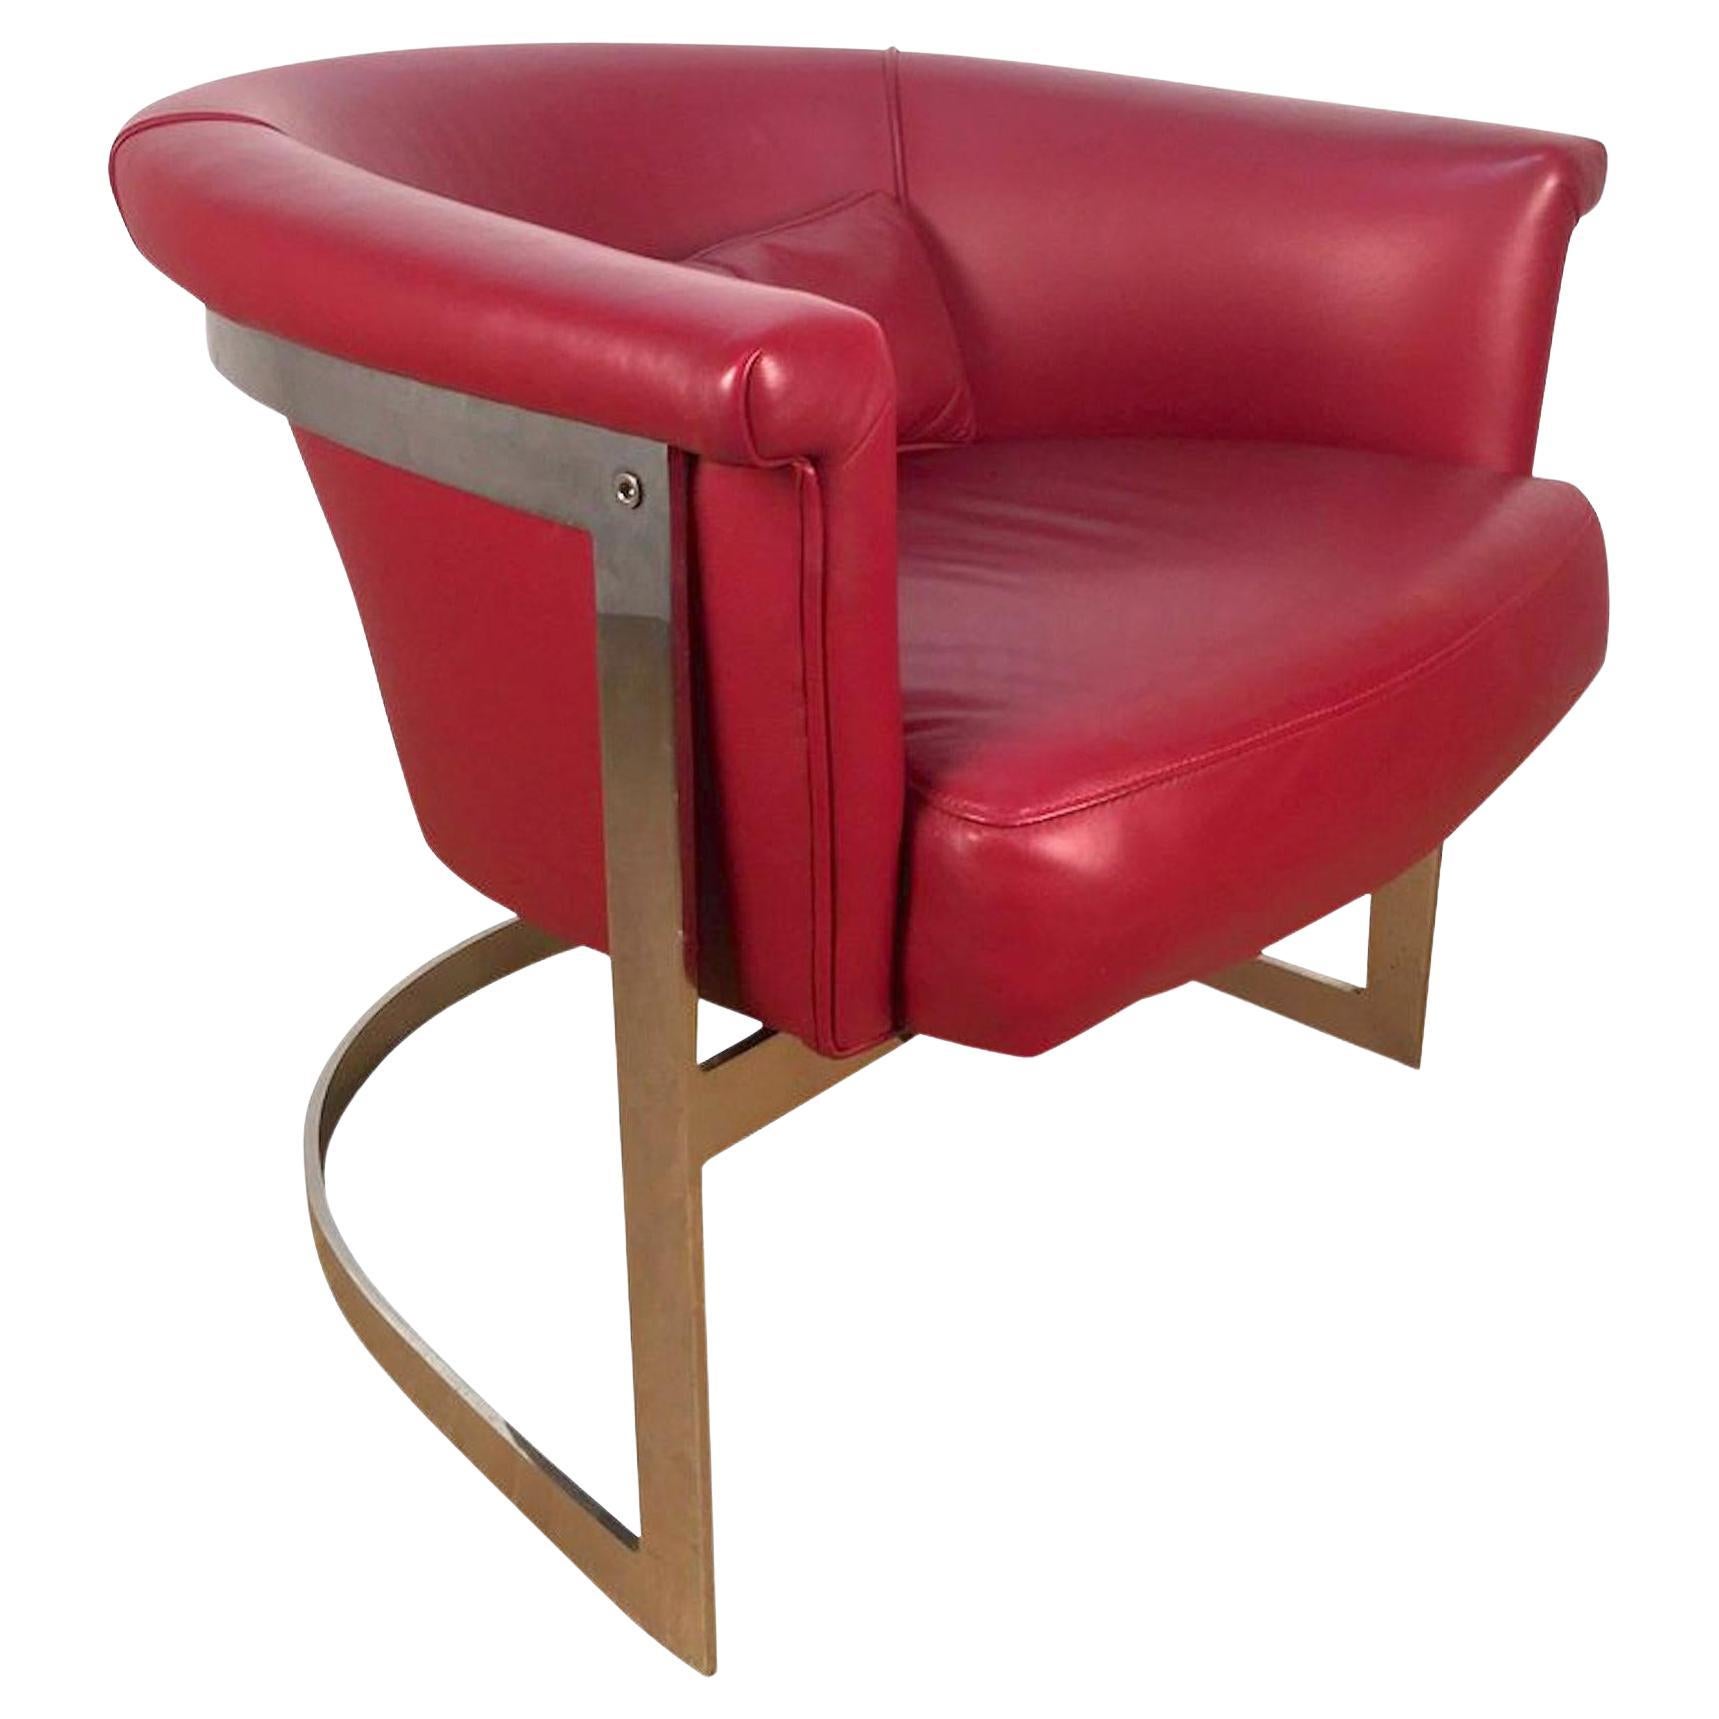 Runder Loungesessel im John Stuart-Stil aus rotem Leder nach Maß